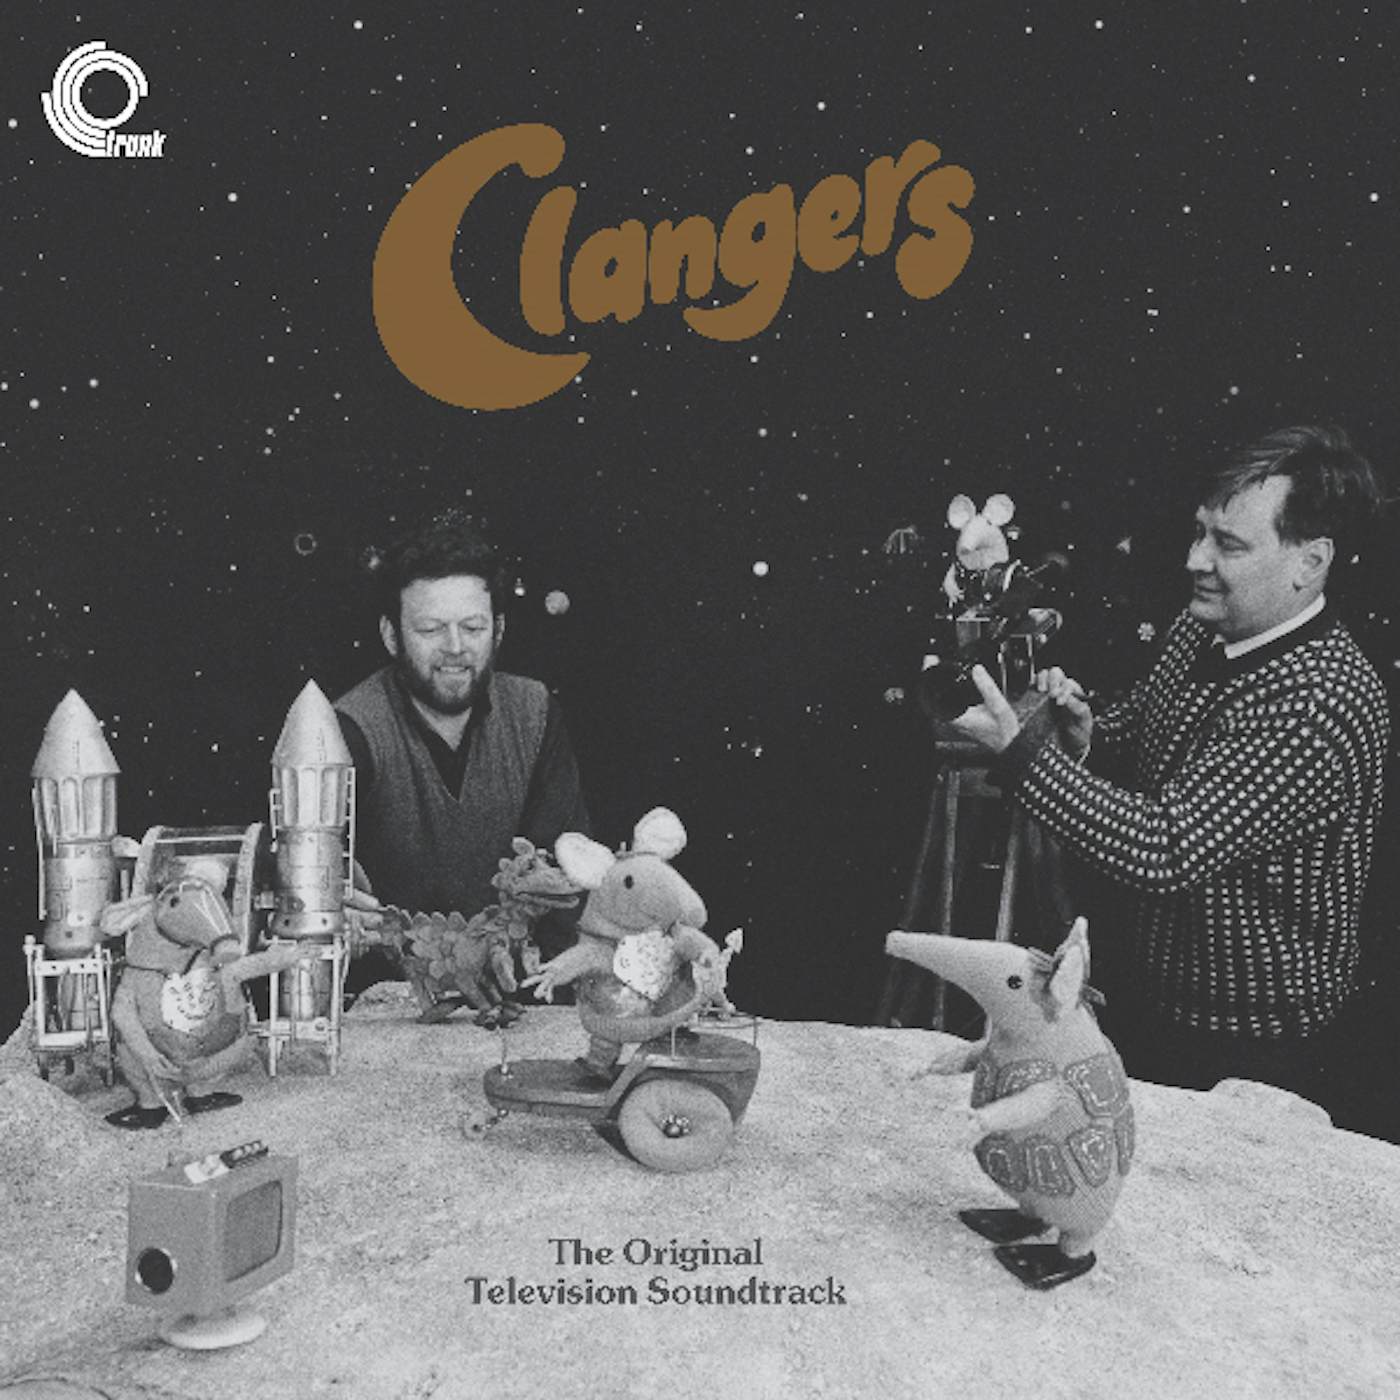 Vernon Elliott Clangers: The Original Television Soundtrack (OST) Vinyl Record